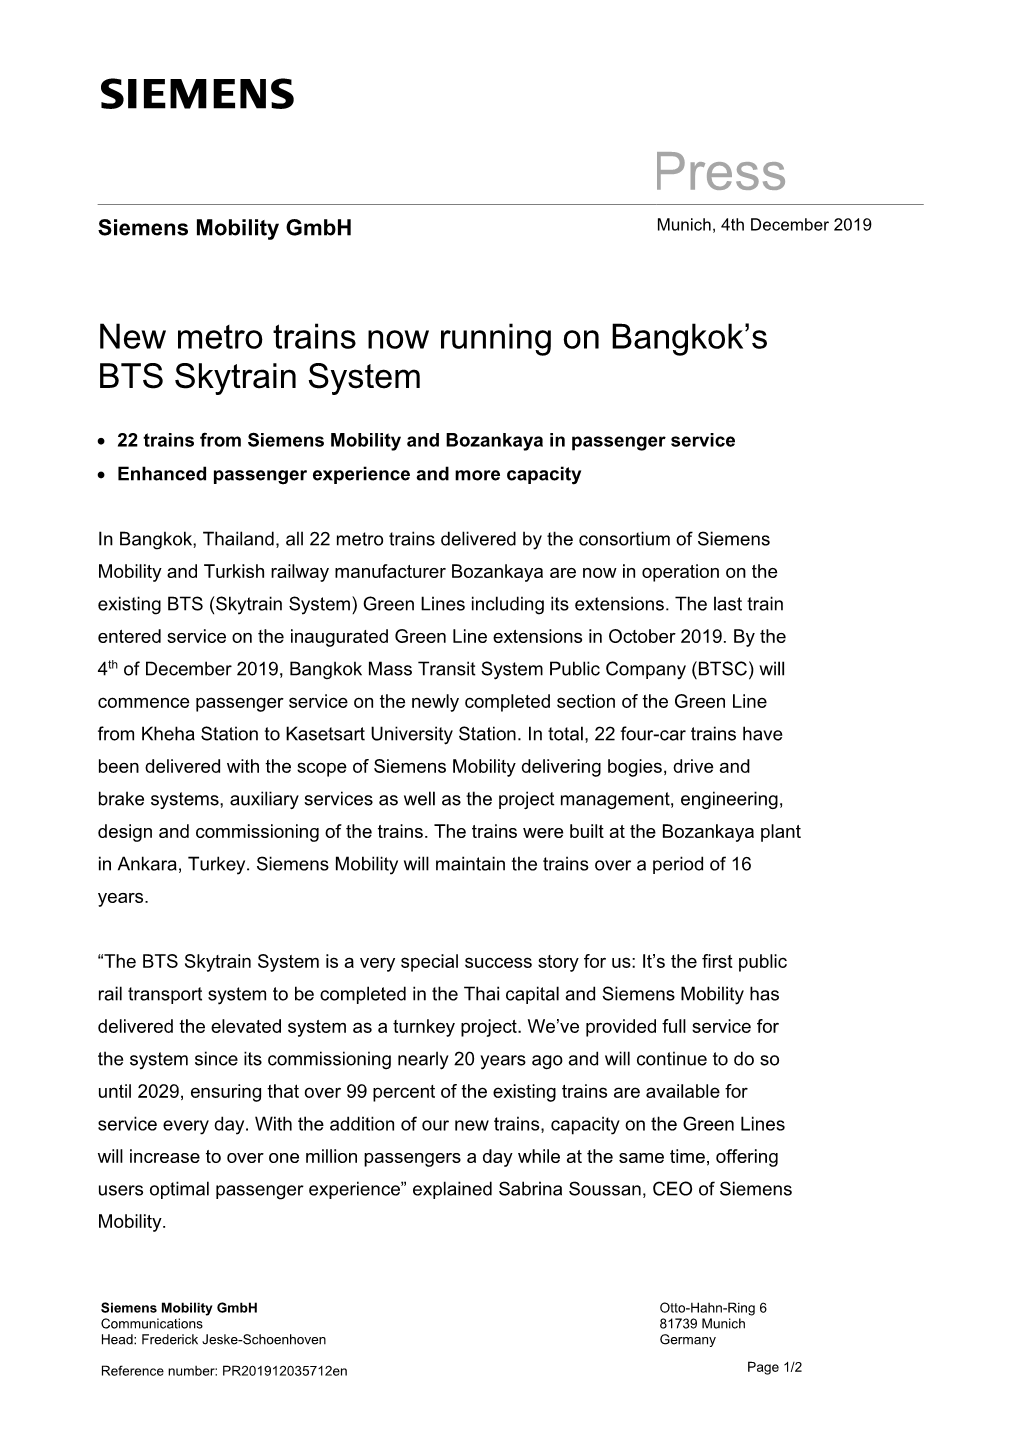 New Metro Trains Now Running on Bangkok's BTS Skytrain System